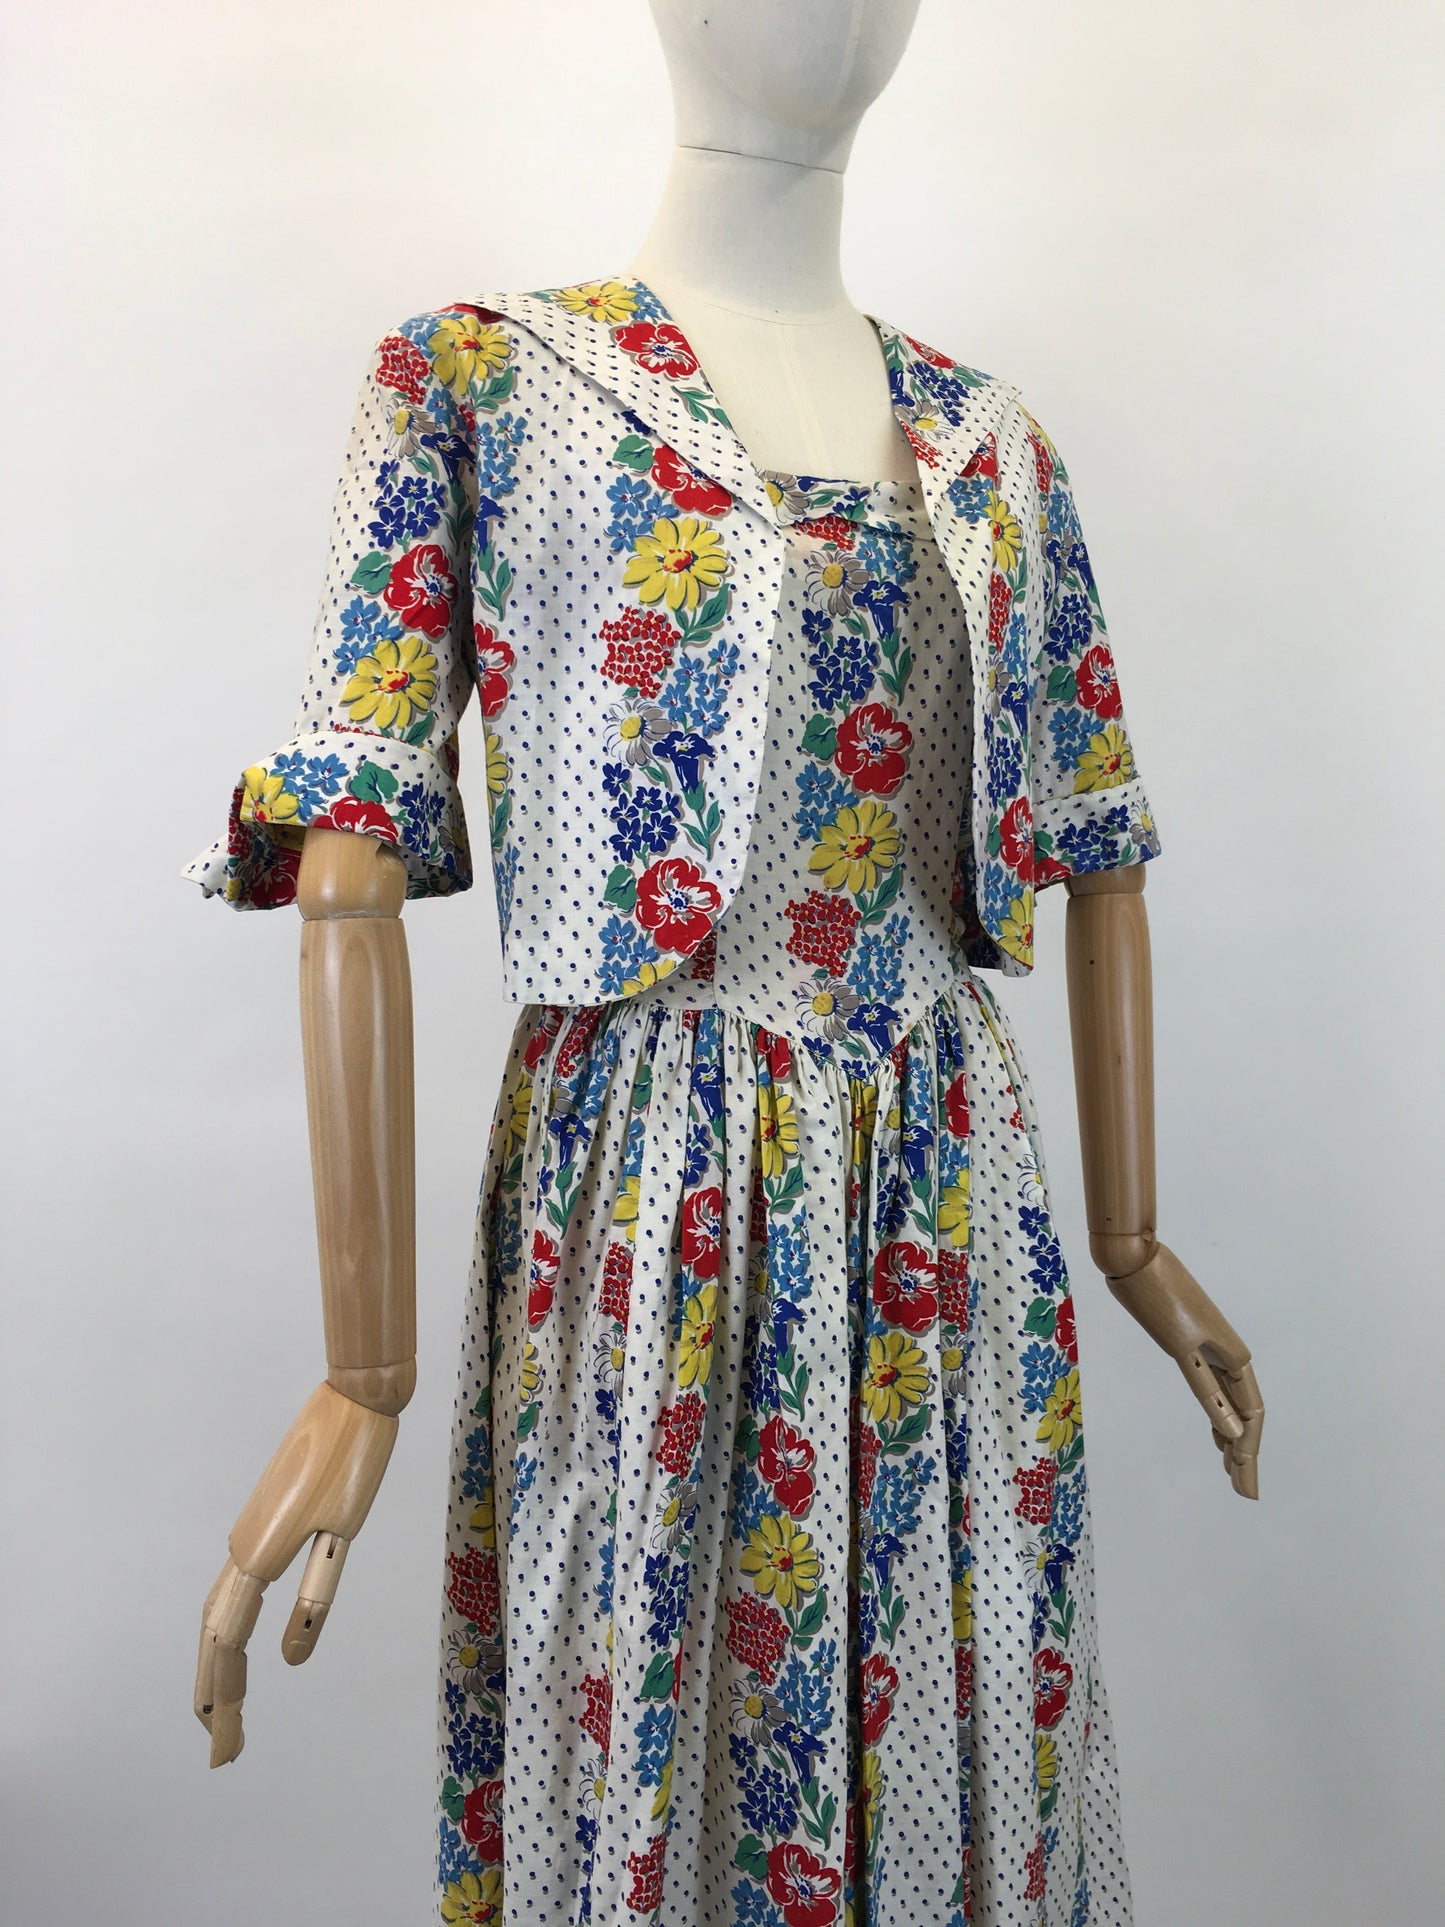 Original Stunning 1940's Sundress & Bolero - In A Bright Summer Floral Print Cotton